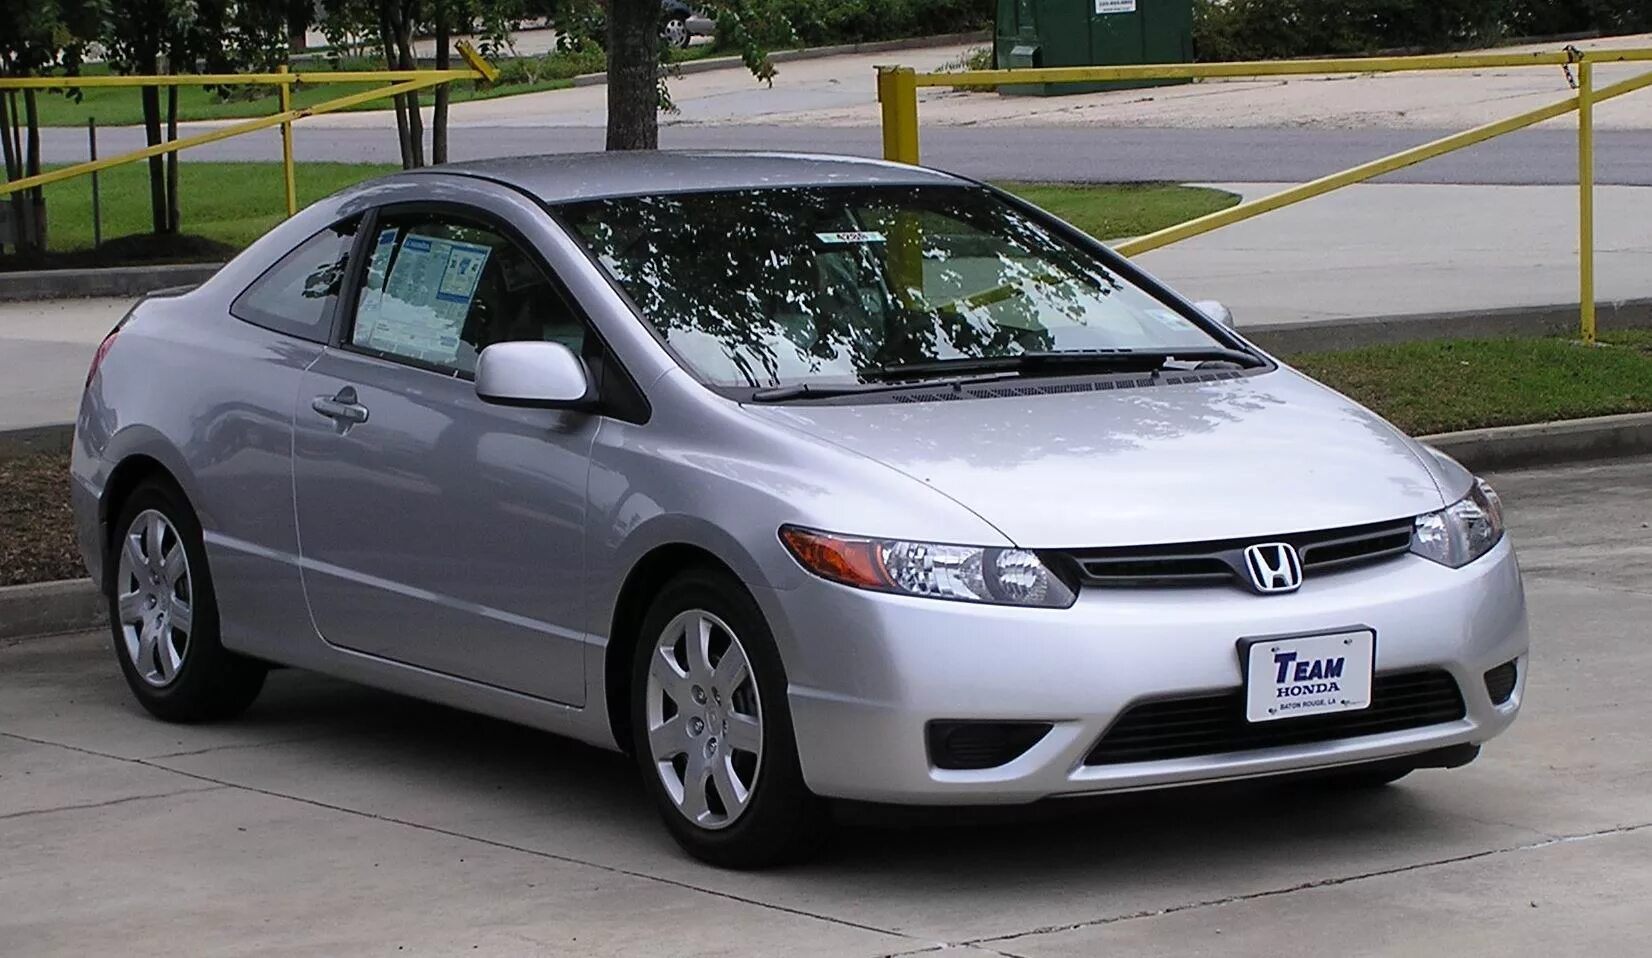 Цивик 2006 года. Honda Civic 2007. Honda Civic 2007 хэтчбек. Civic 2007 1.8. Хонда Цивик 2007 года.